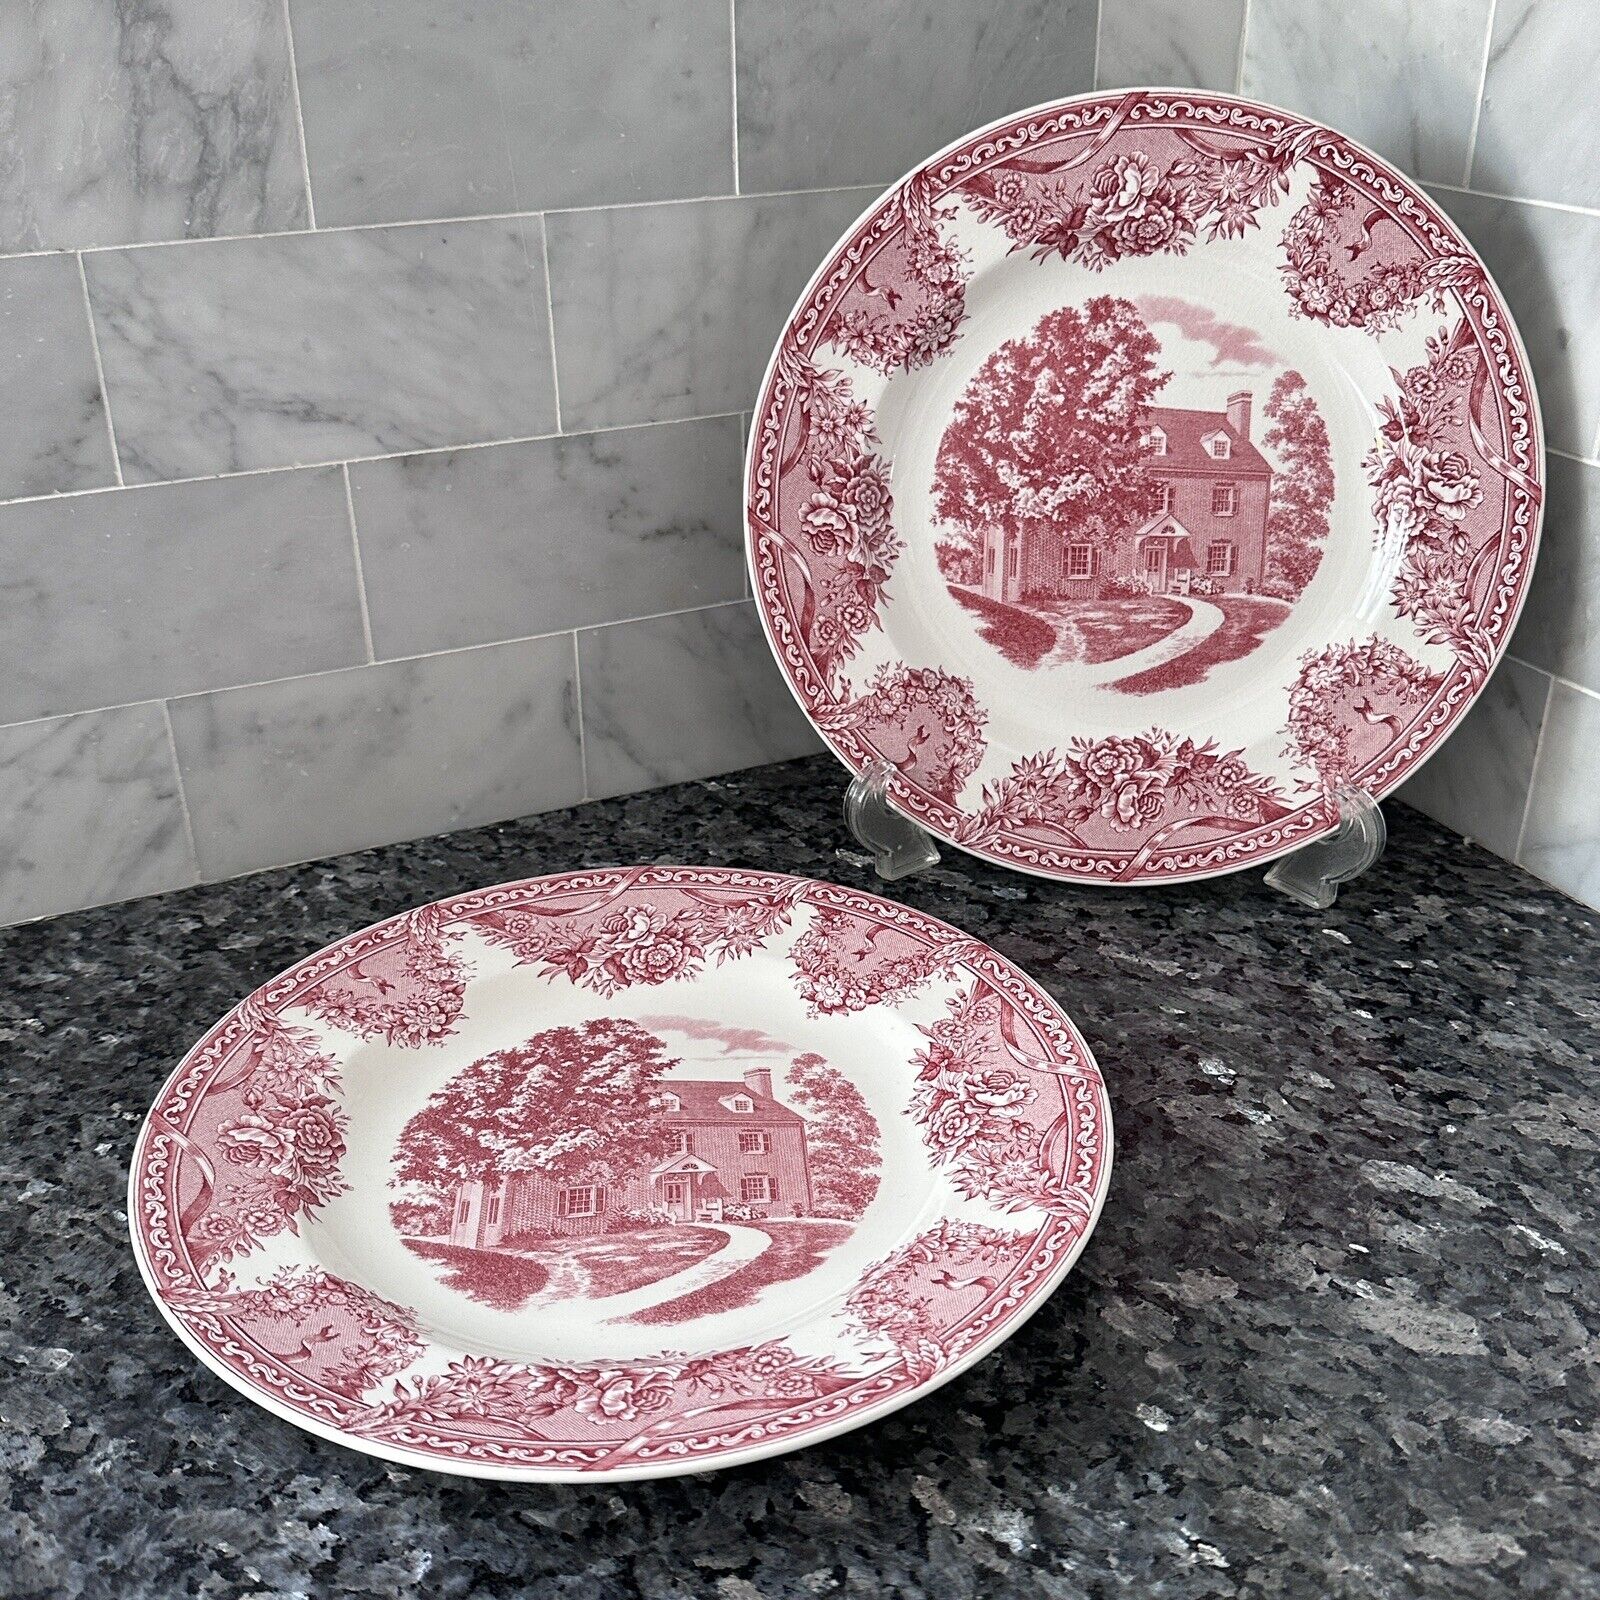 Vintage Wedgwood Plate Salem College NC Lizora Hanes House England Red/Pink